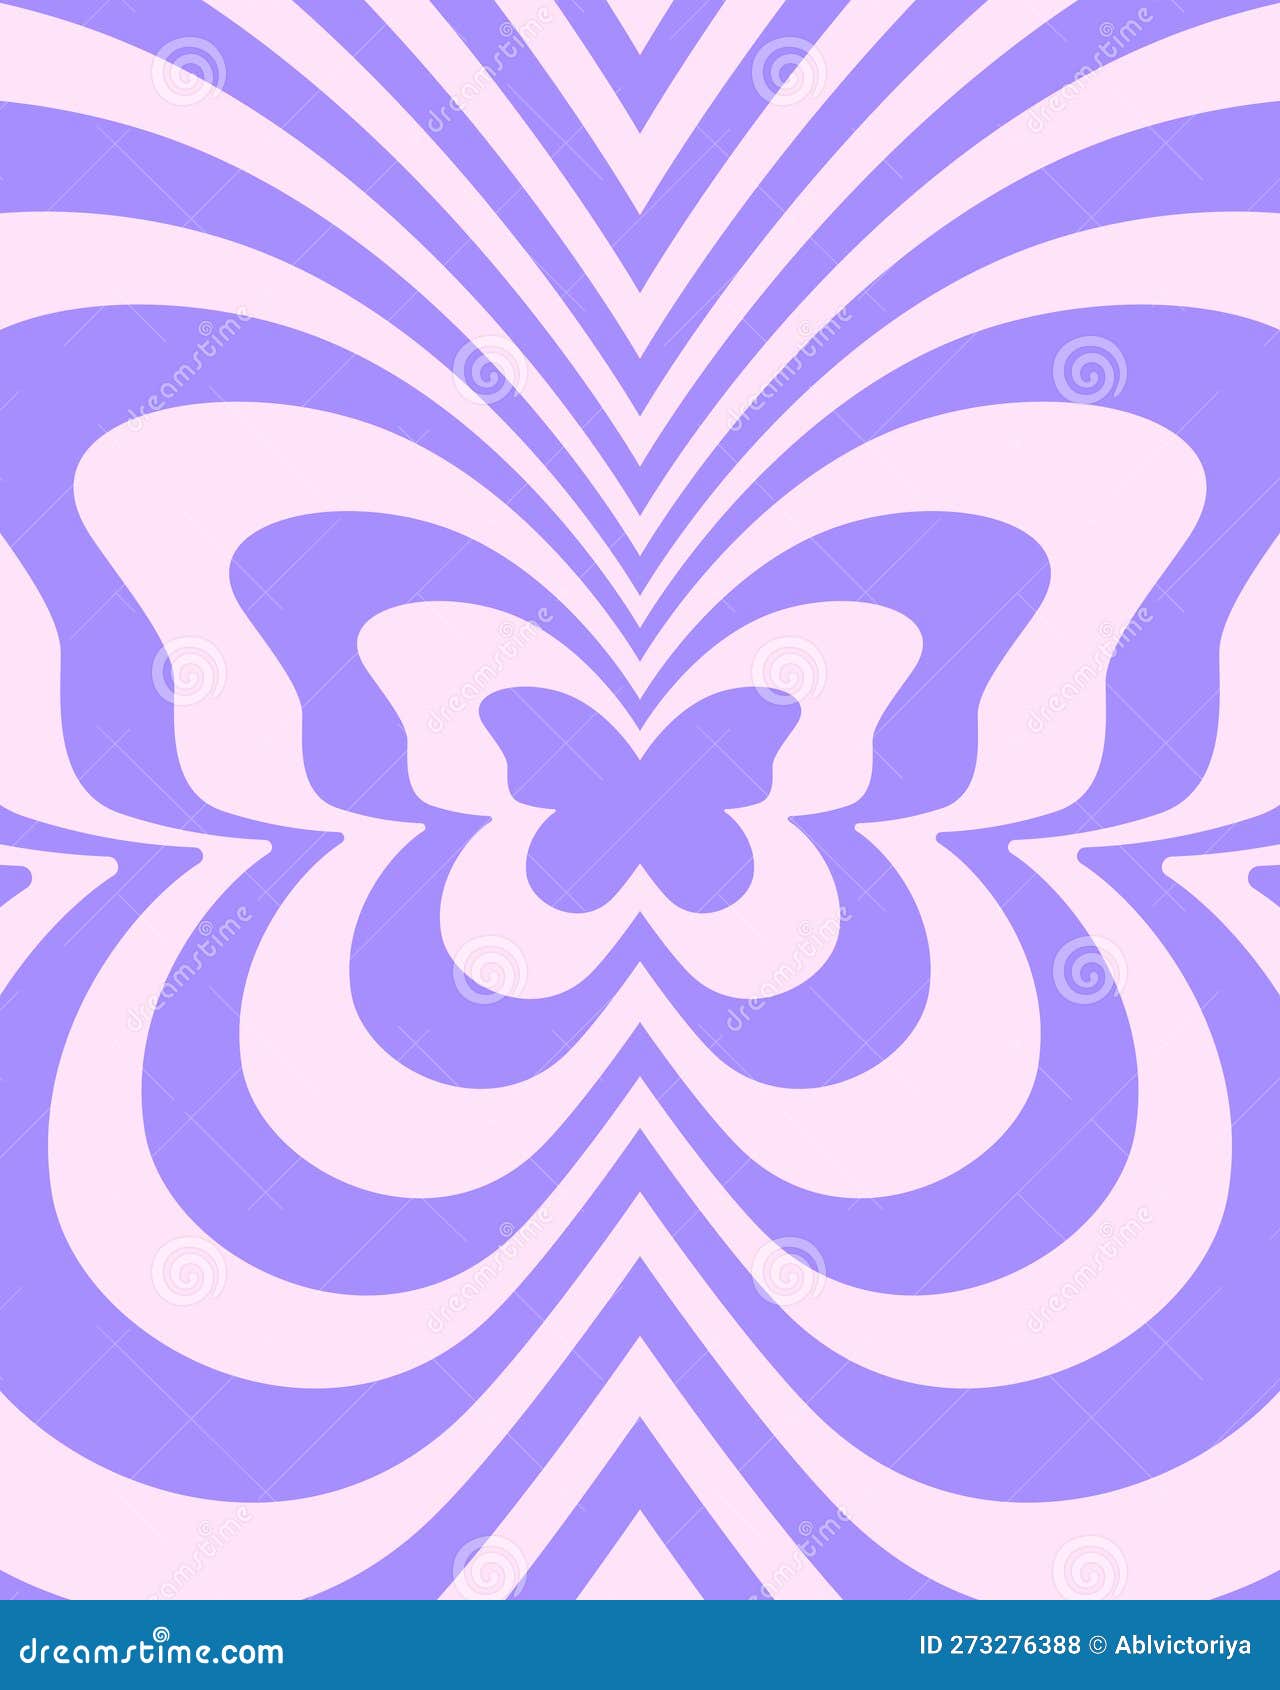 Repeating Purple Butterflies Background in Trendy Retro 2000s Design ...